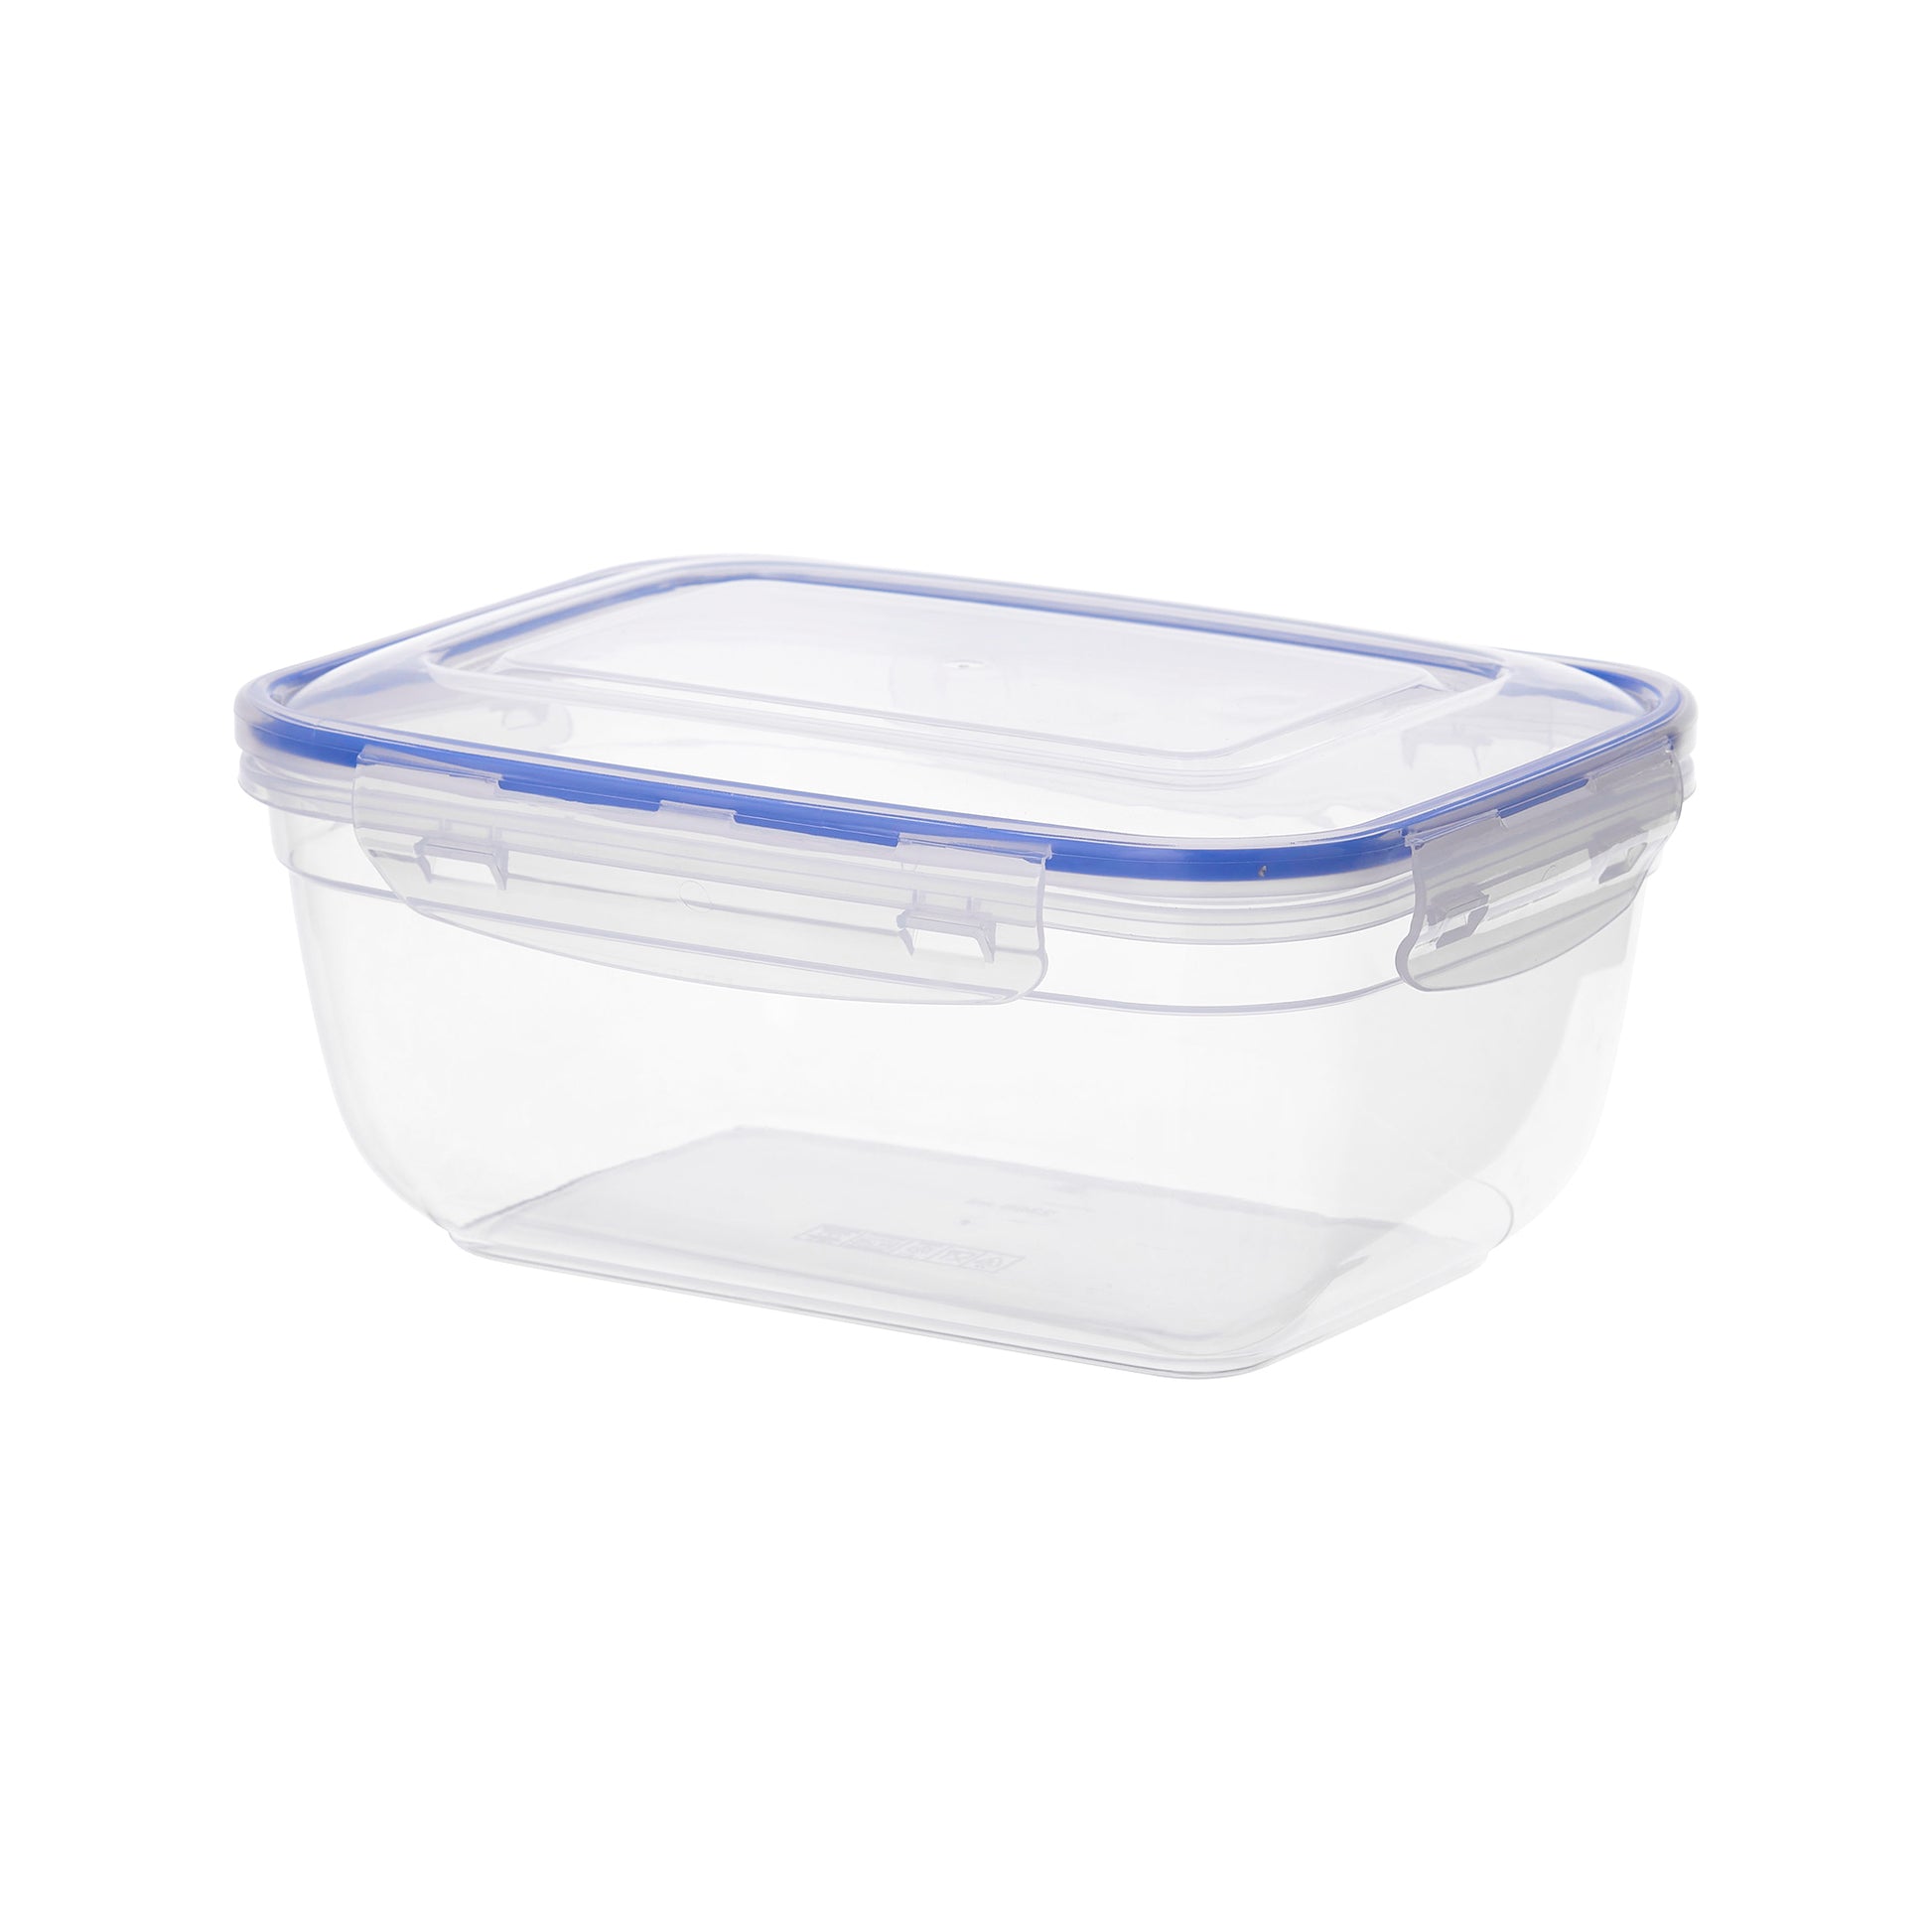 Superio Brand 3.5-quart Plastic BPA-Free Reusable Food Storage